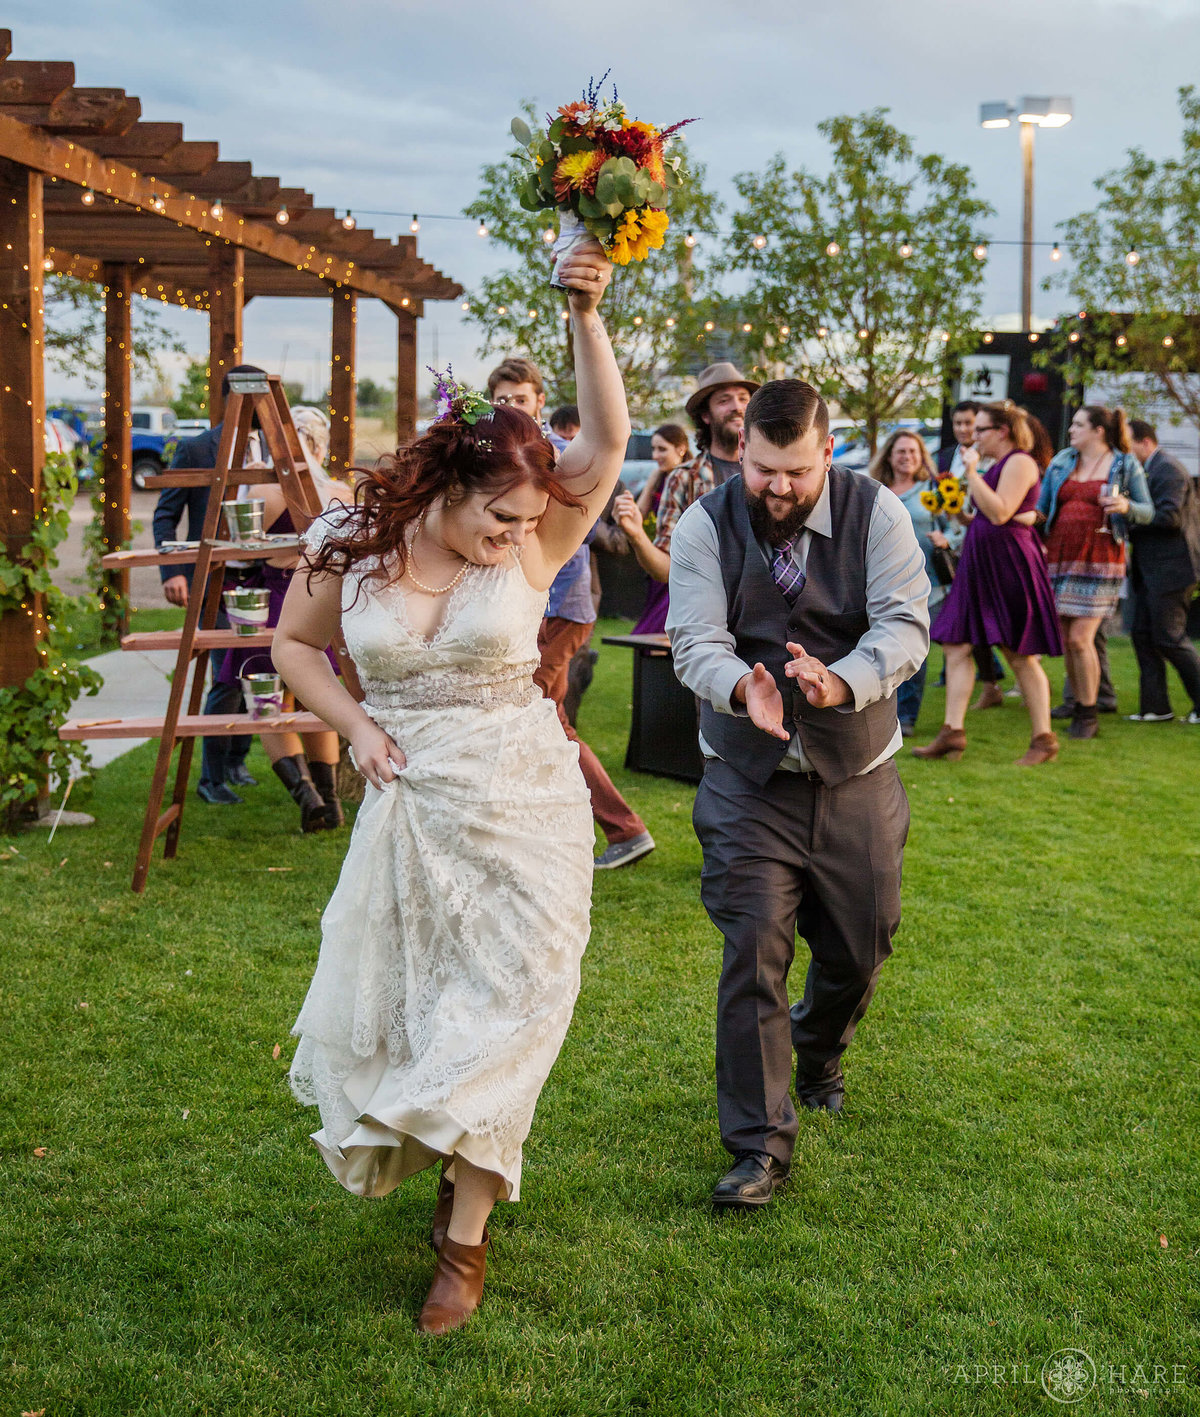 Celebrating at an outdoor Colorado wedding reception at Balistreri Vineyard